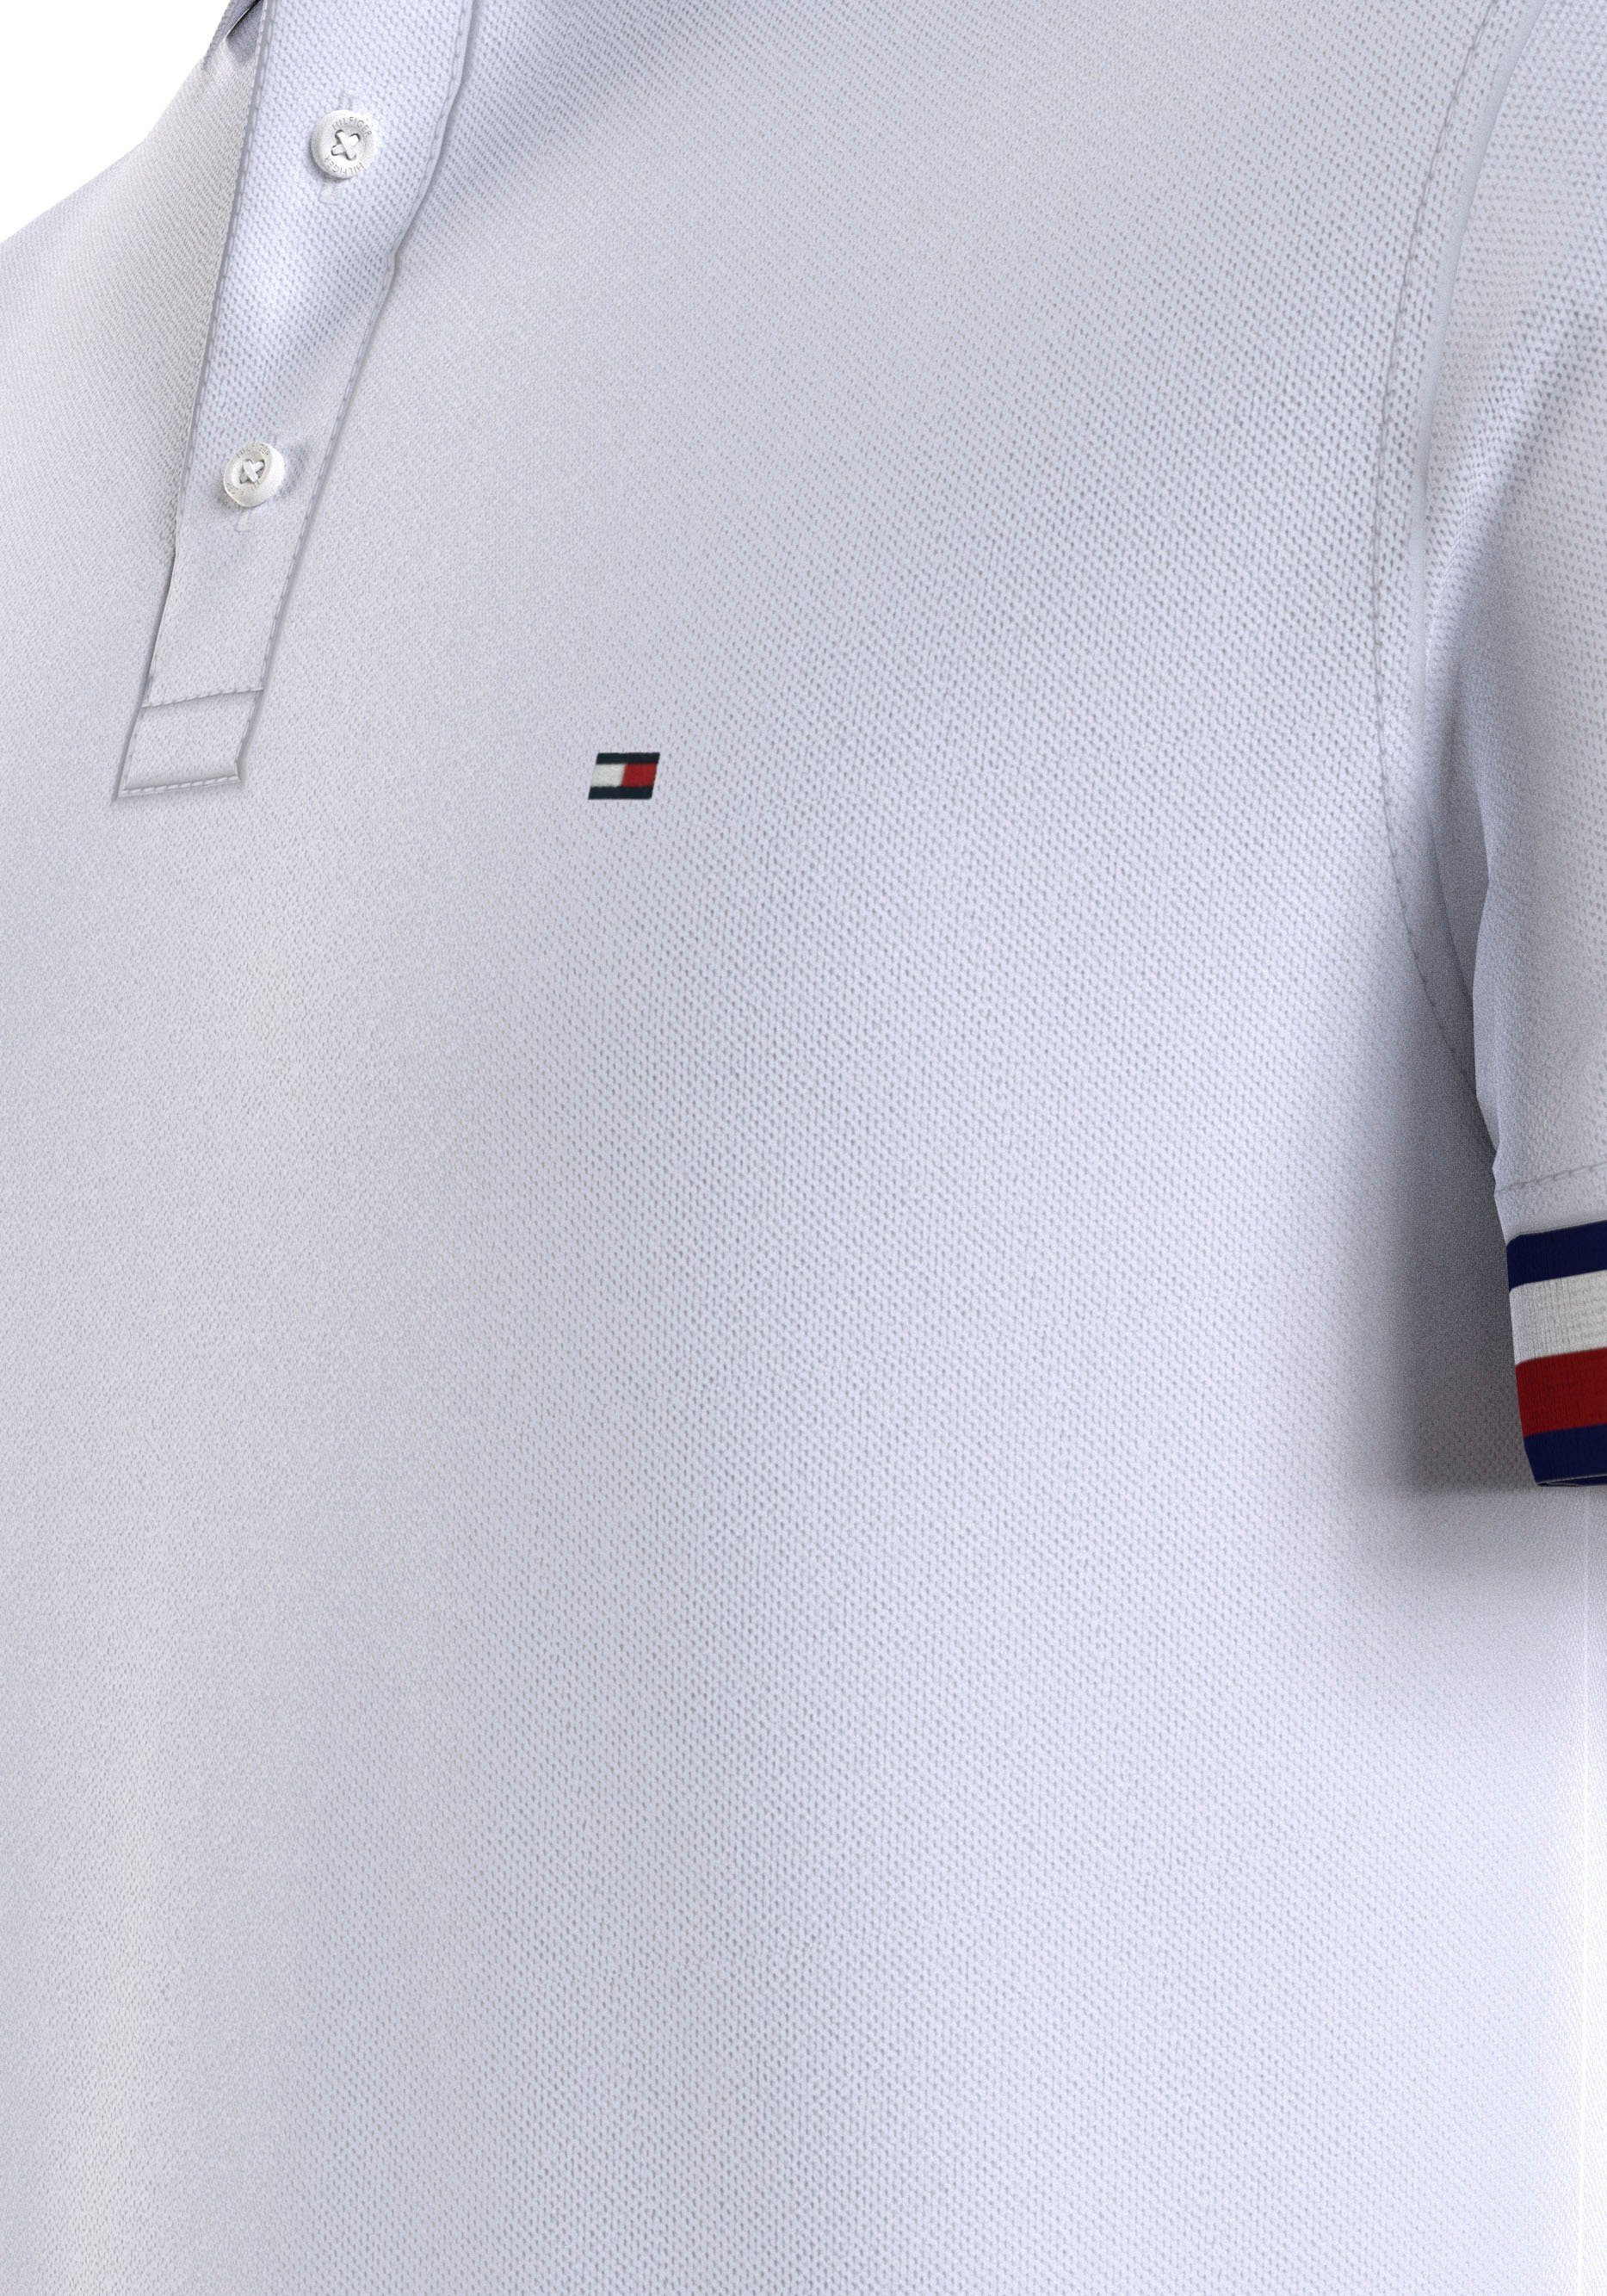 Tommy Hilfiger CUFF FLAG S/F Poloshirt BT-MONOTYPE White Tall POLO-B & Big